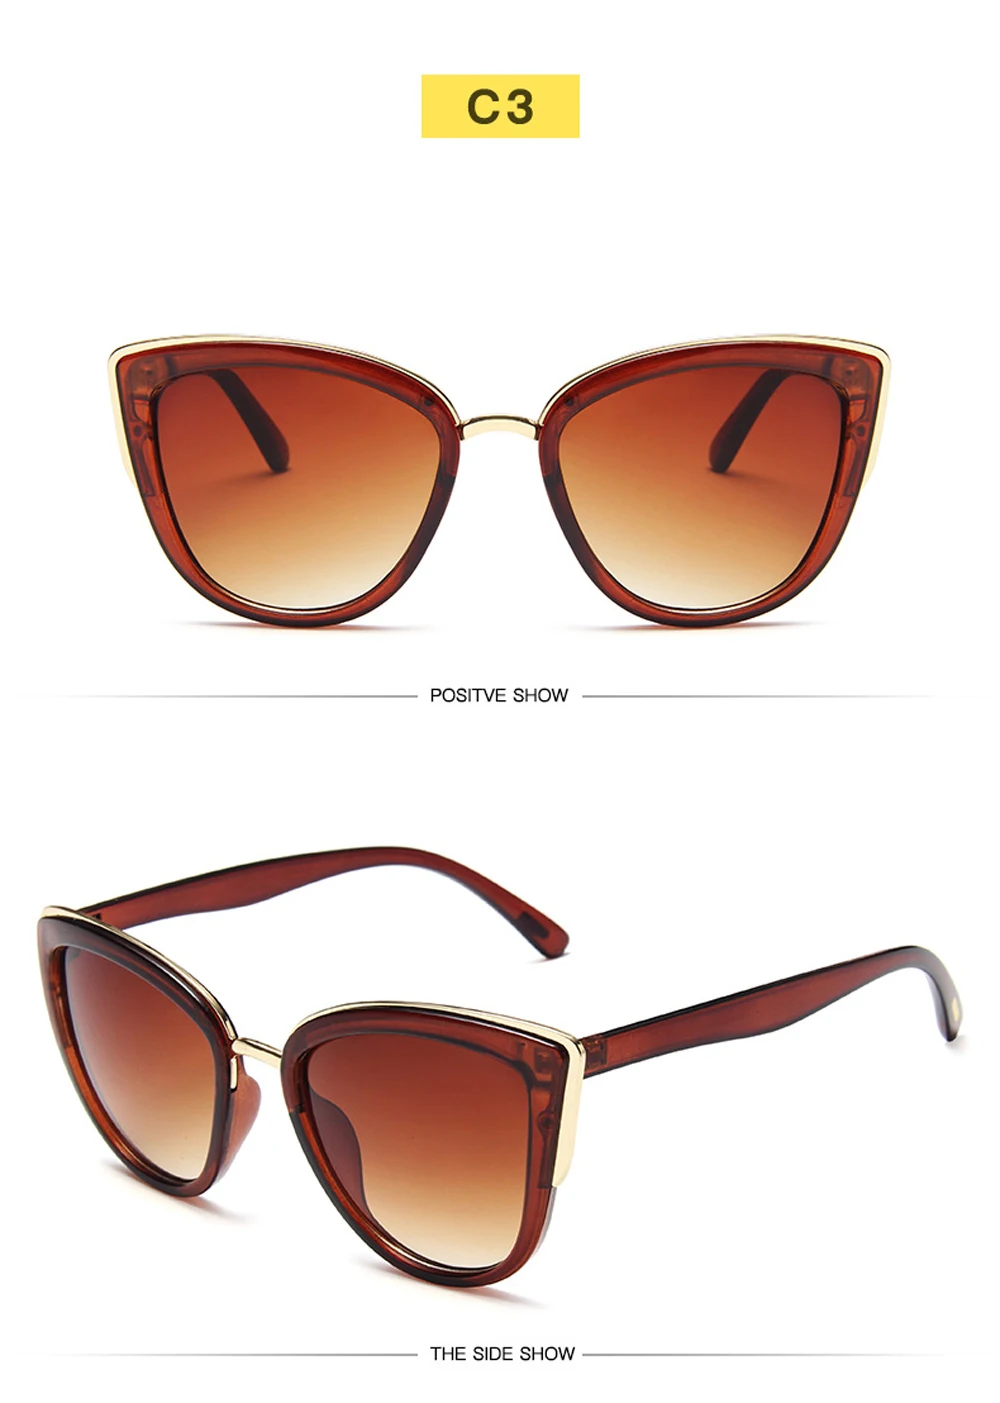 MUSELIFE Cateye Sunglasses Women Vintage Gradient Glasses Retro Cat eye Sun glasses Female Eyewear UV400